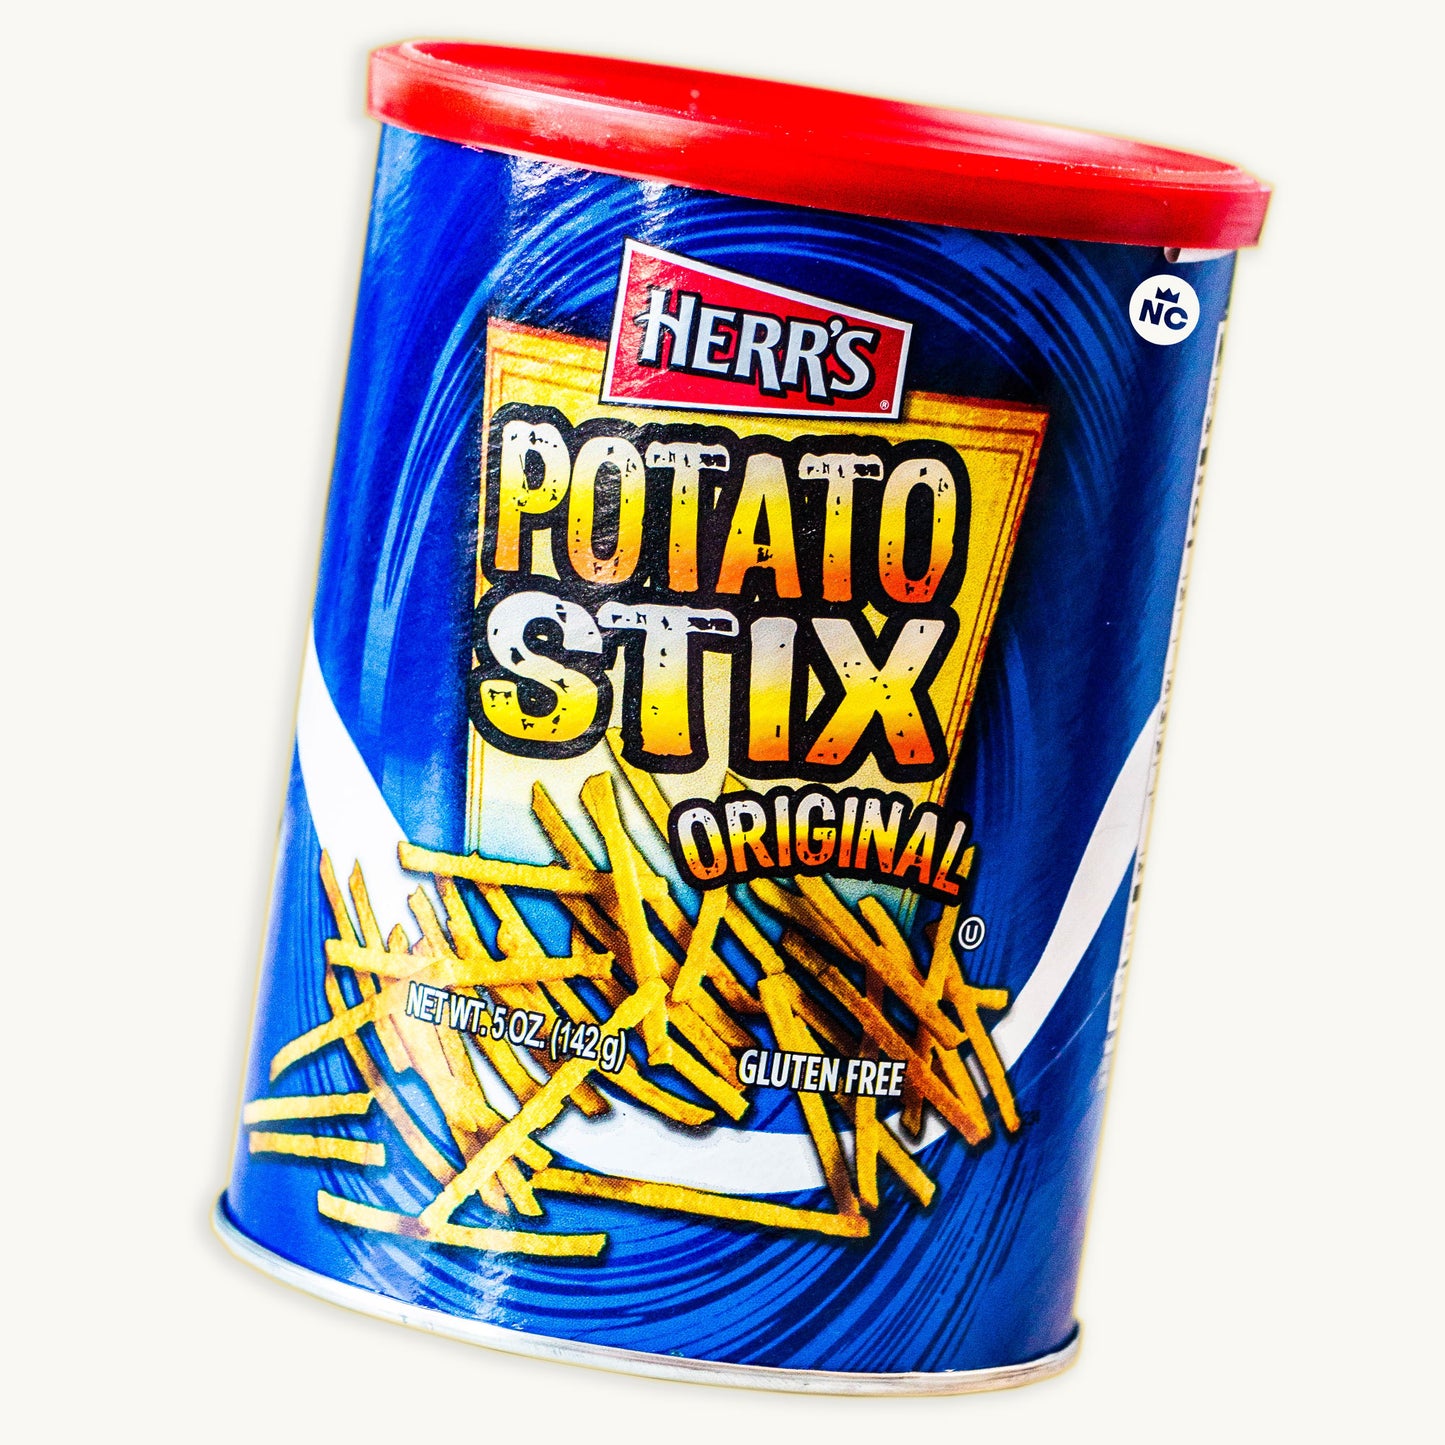 Herr's Potato Stix (4, 5oz cans) - Utz Garlic Onion Potato Chips (2.75oz)